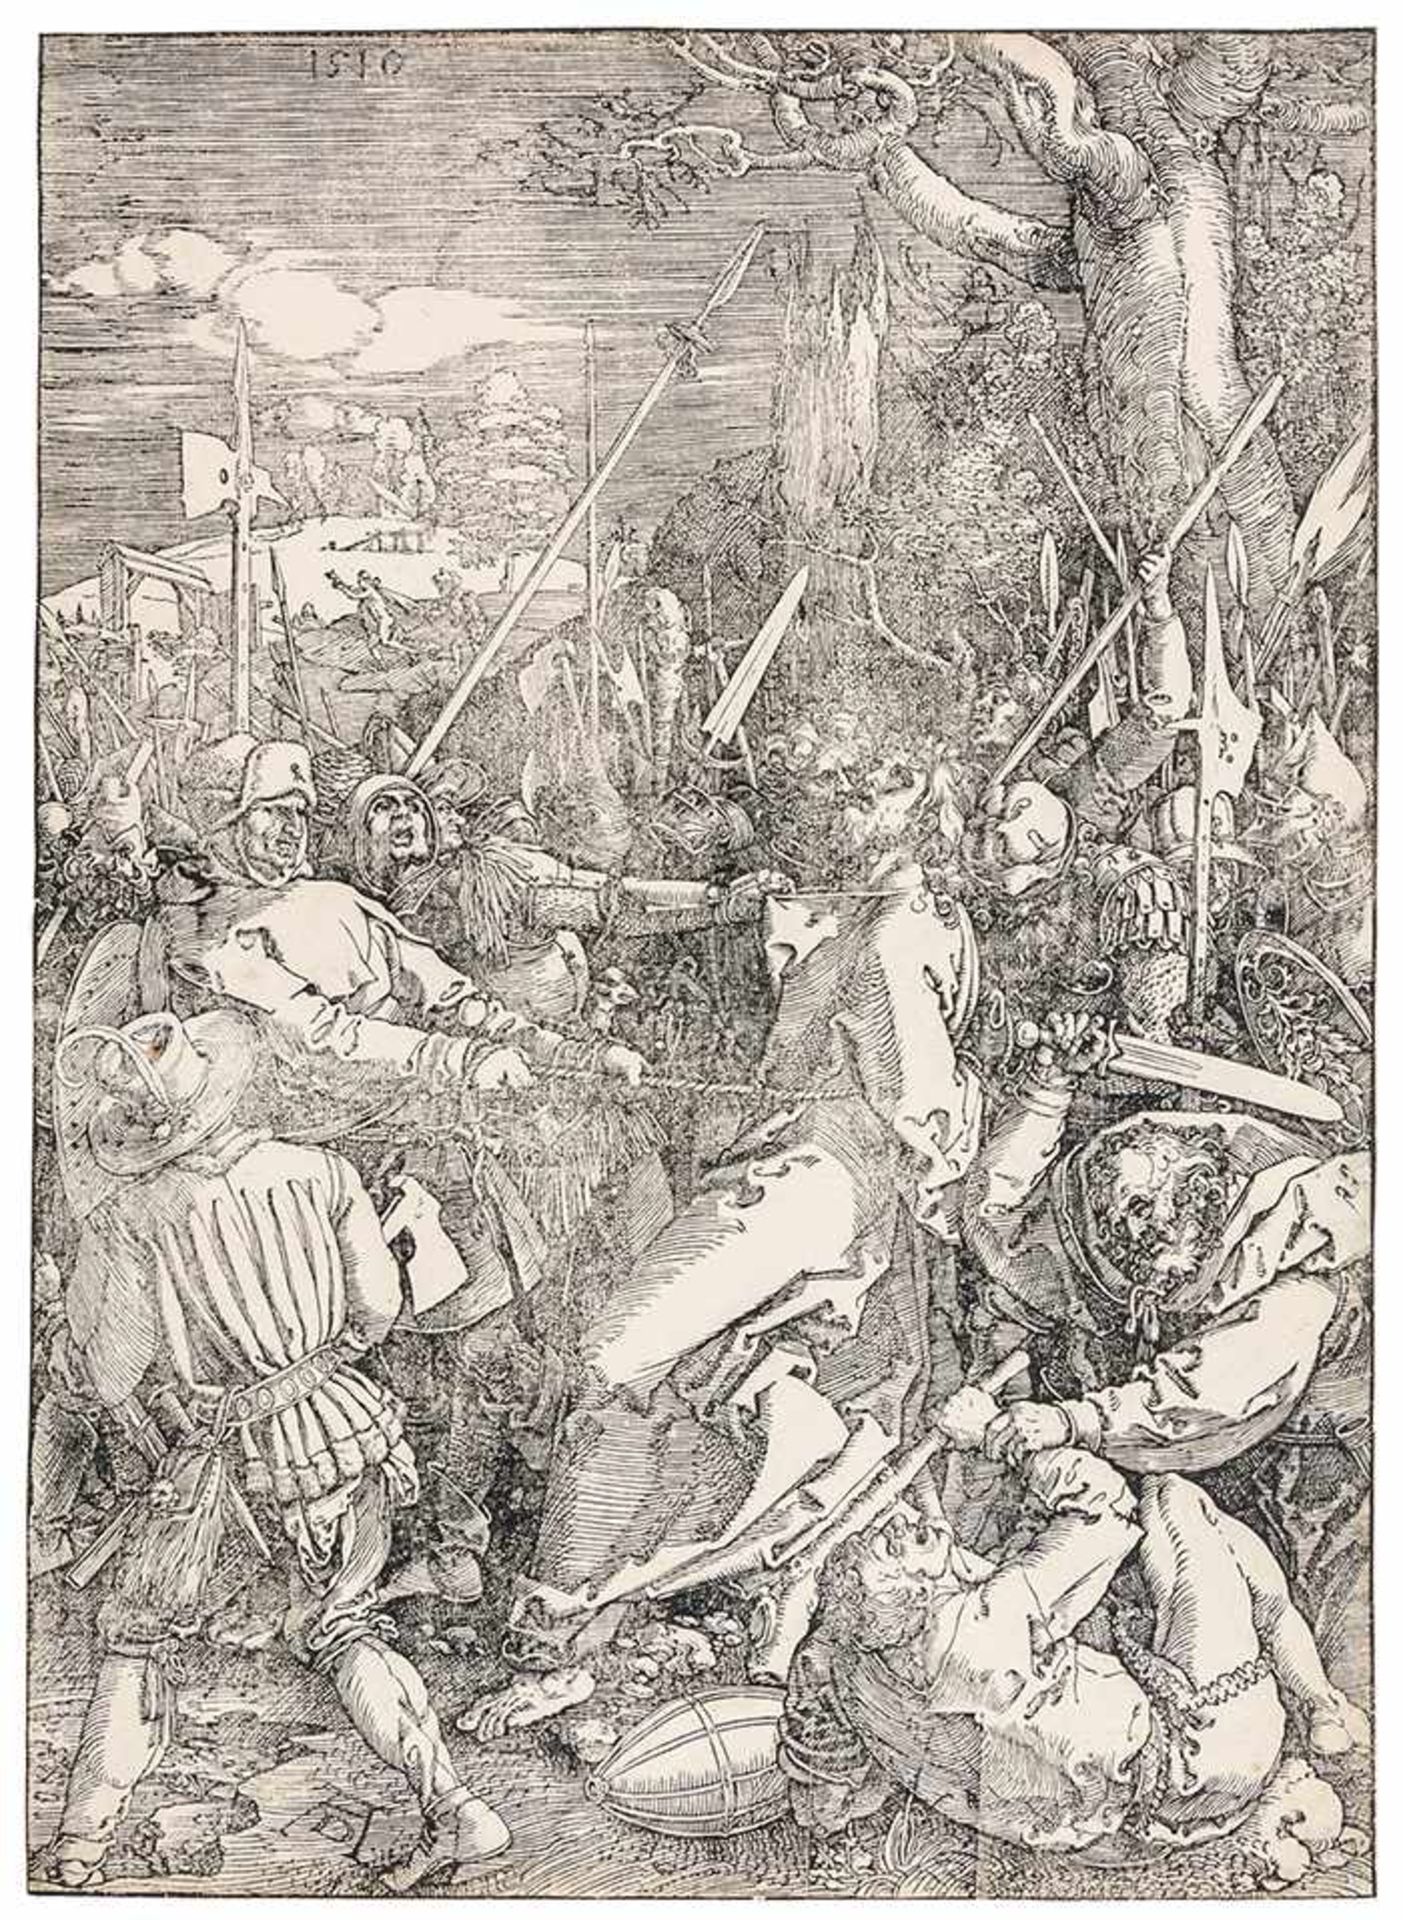 Dürer, Albrecht. Gefangennahme Christi. Blatt 4 der Großen Passion. Holzschnitt auf Bütten